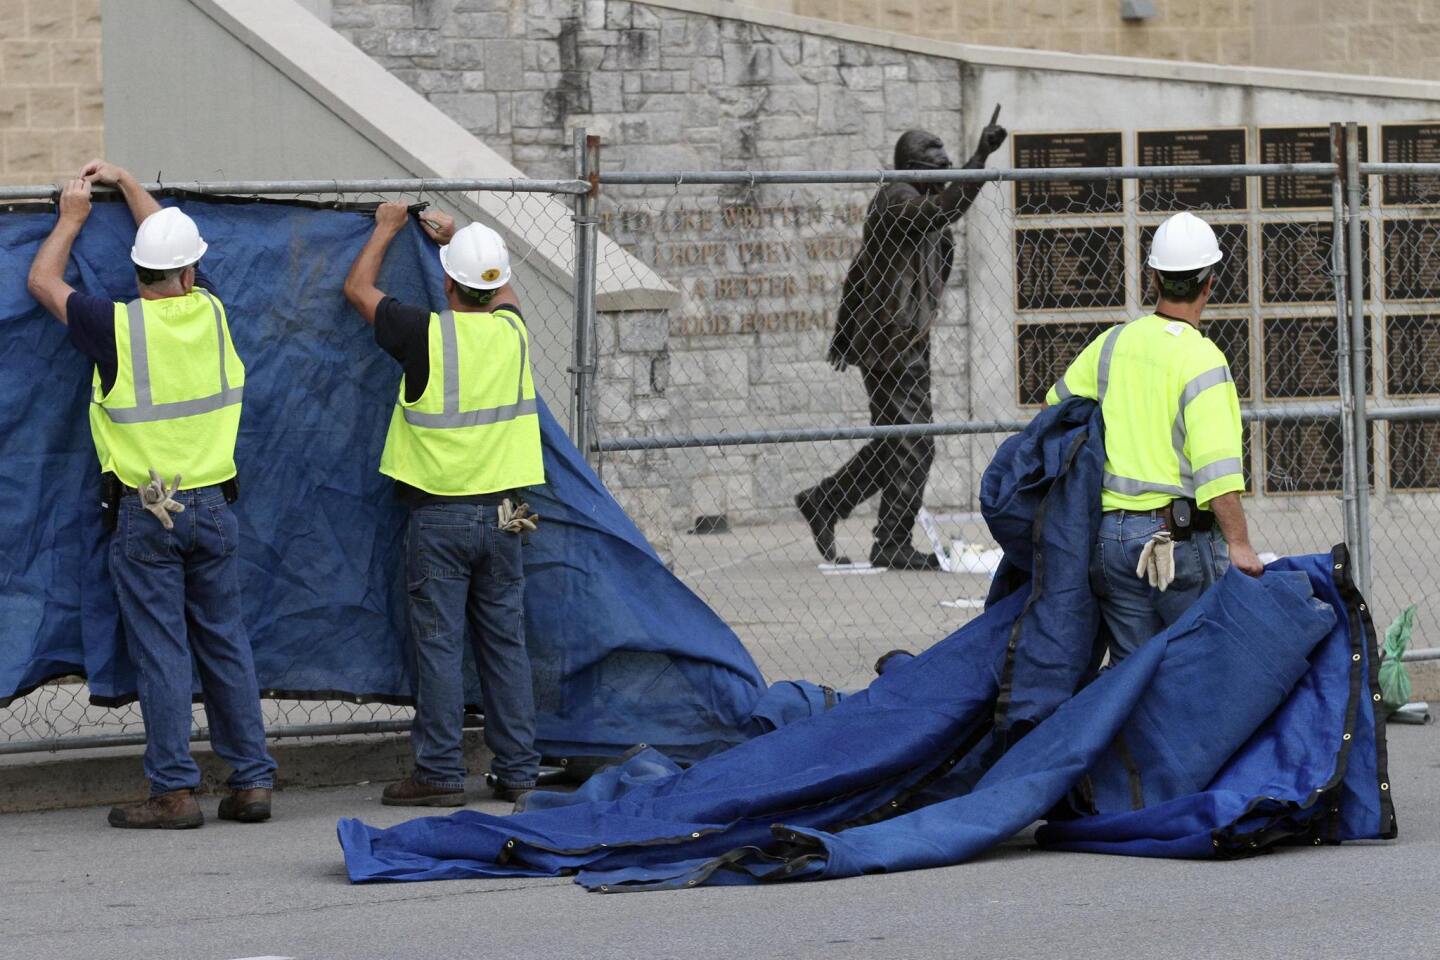 Joe Paterno Statue Removed